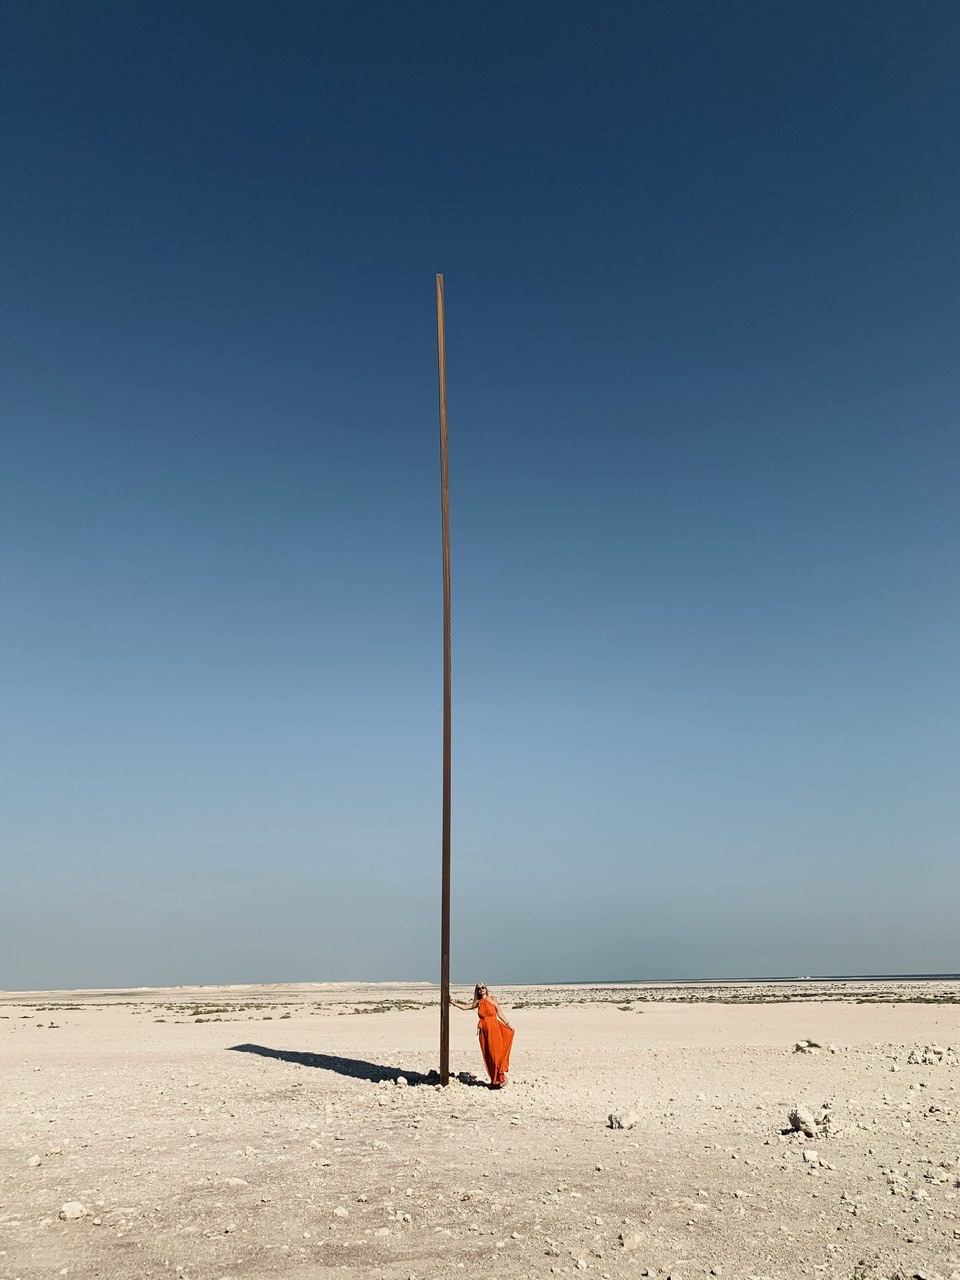 Tijana in Qatari Desert by Richard Serra's East-West/West-East

Kalita dress